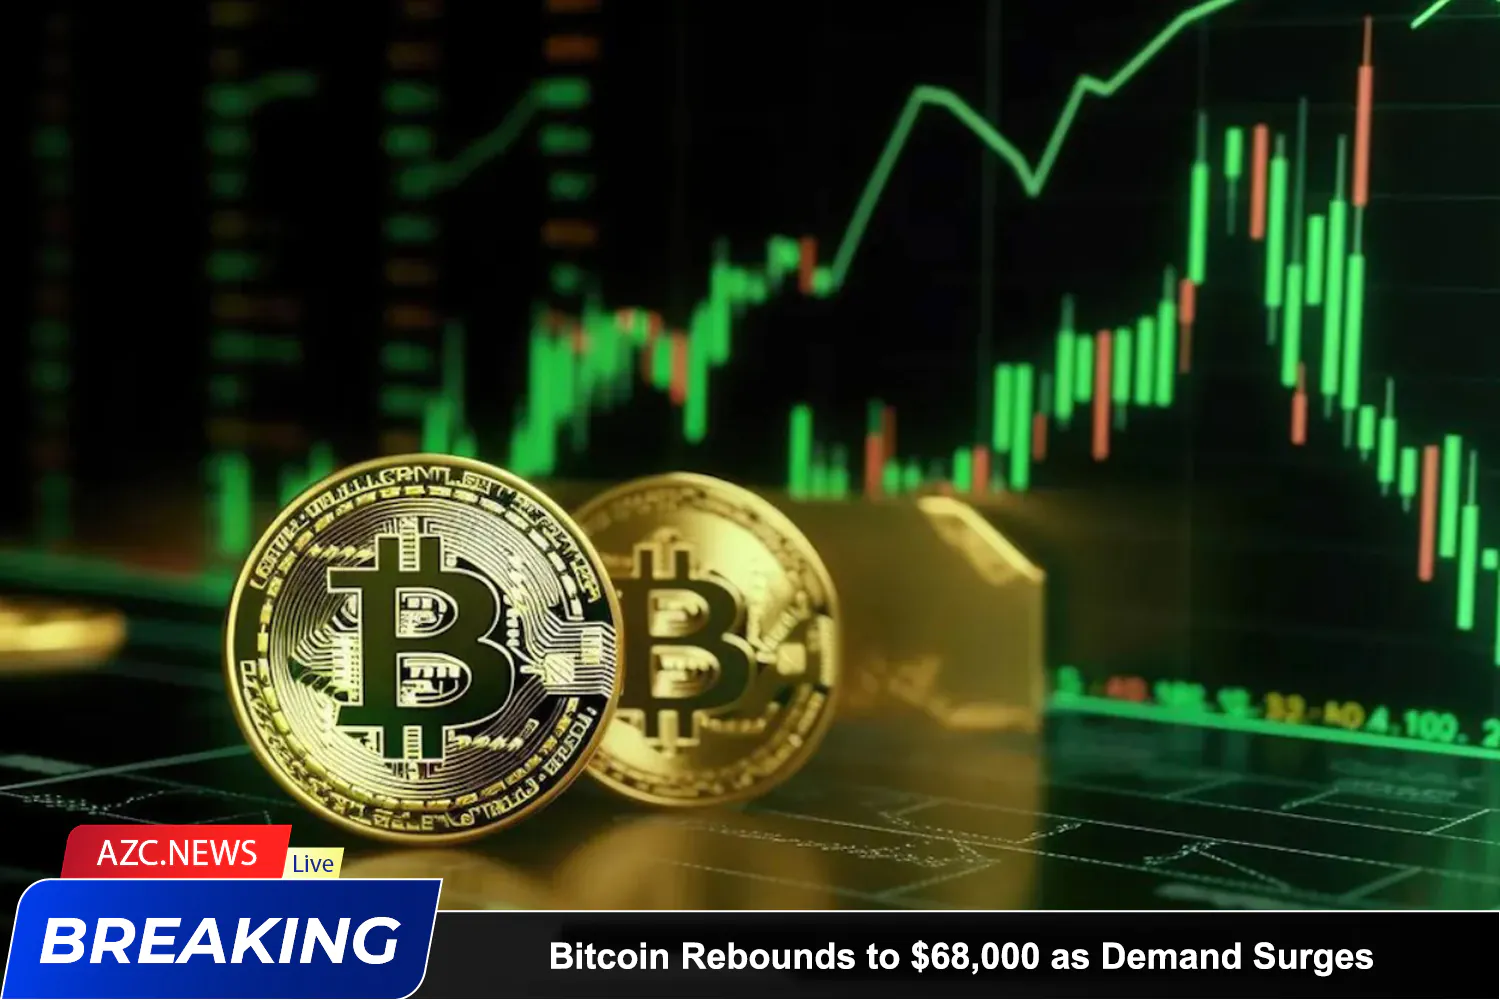 Azcnews Bitcoin Rebounds To $68,000 As Demand Surges